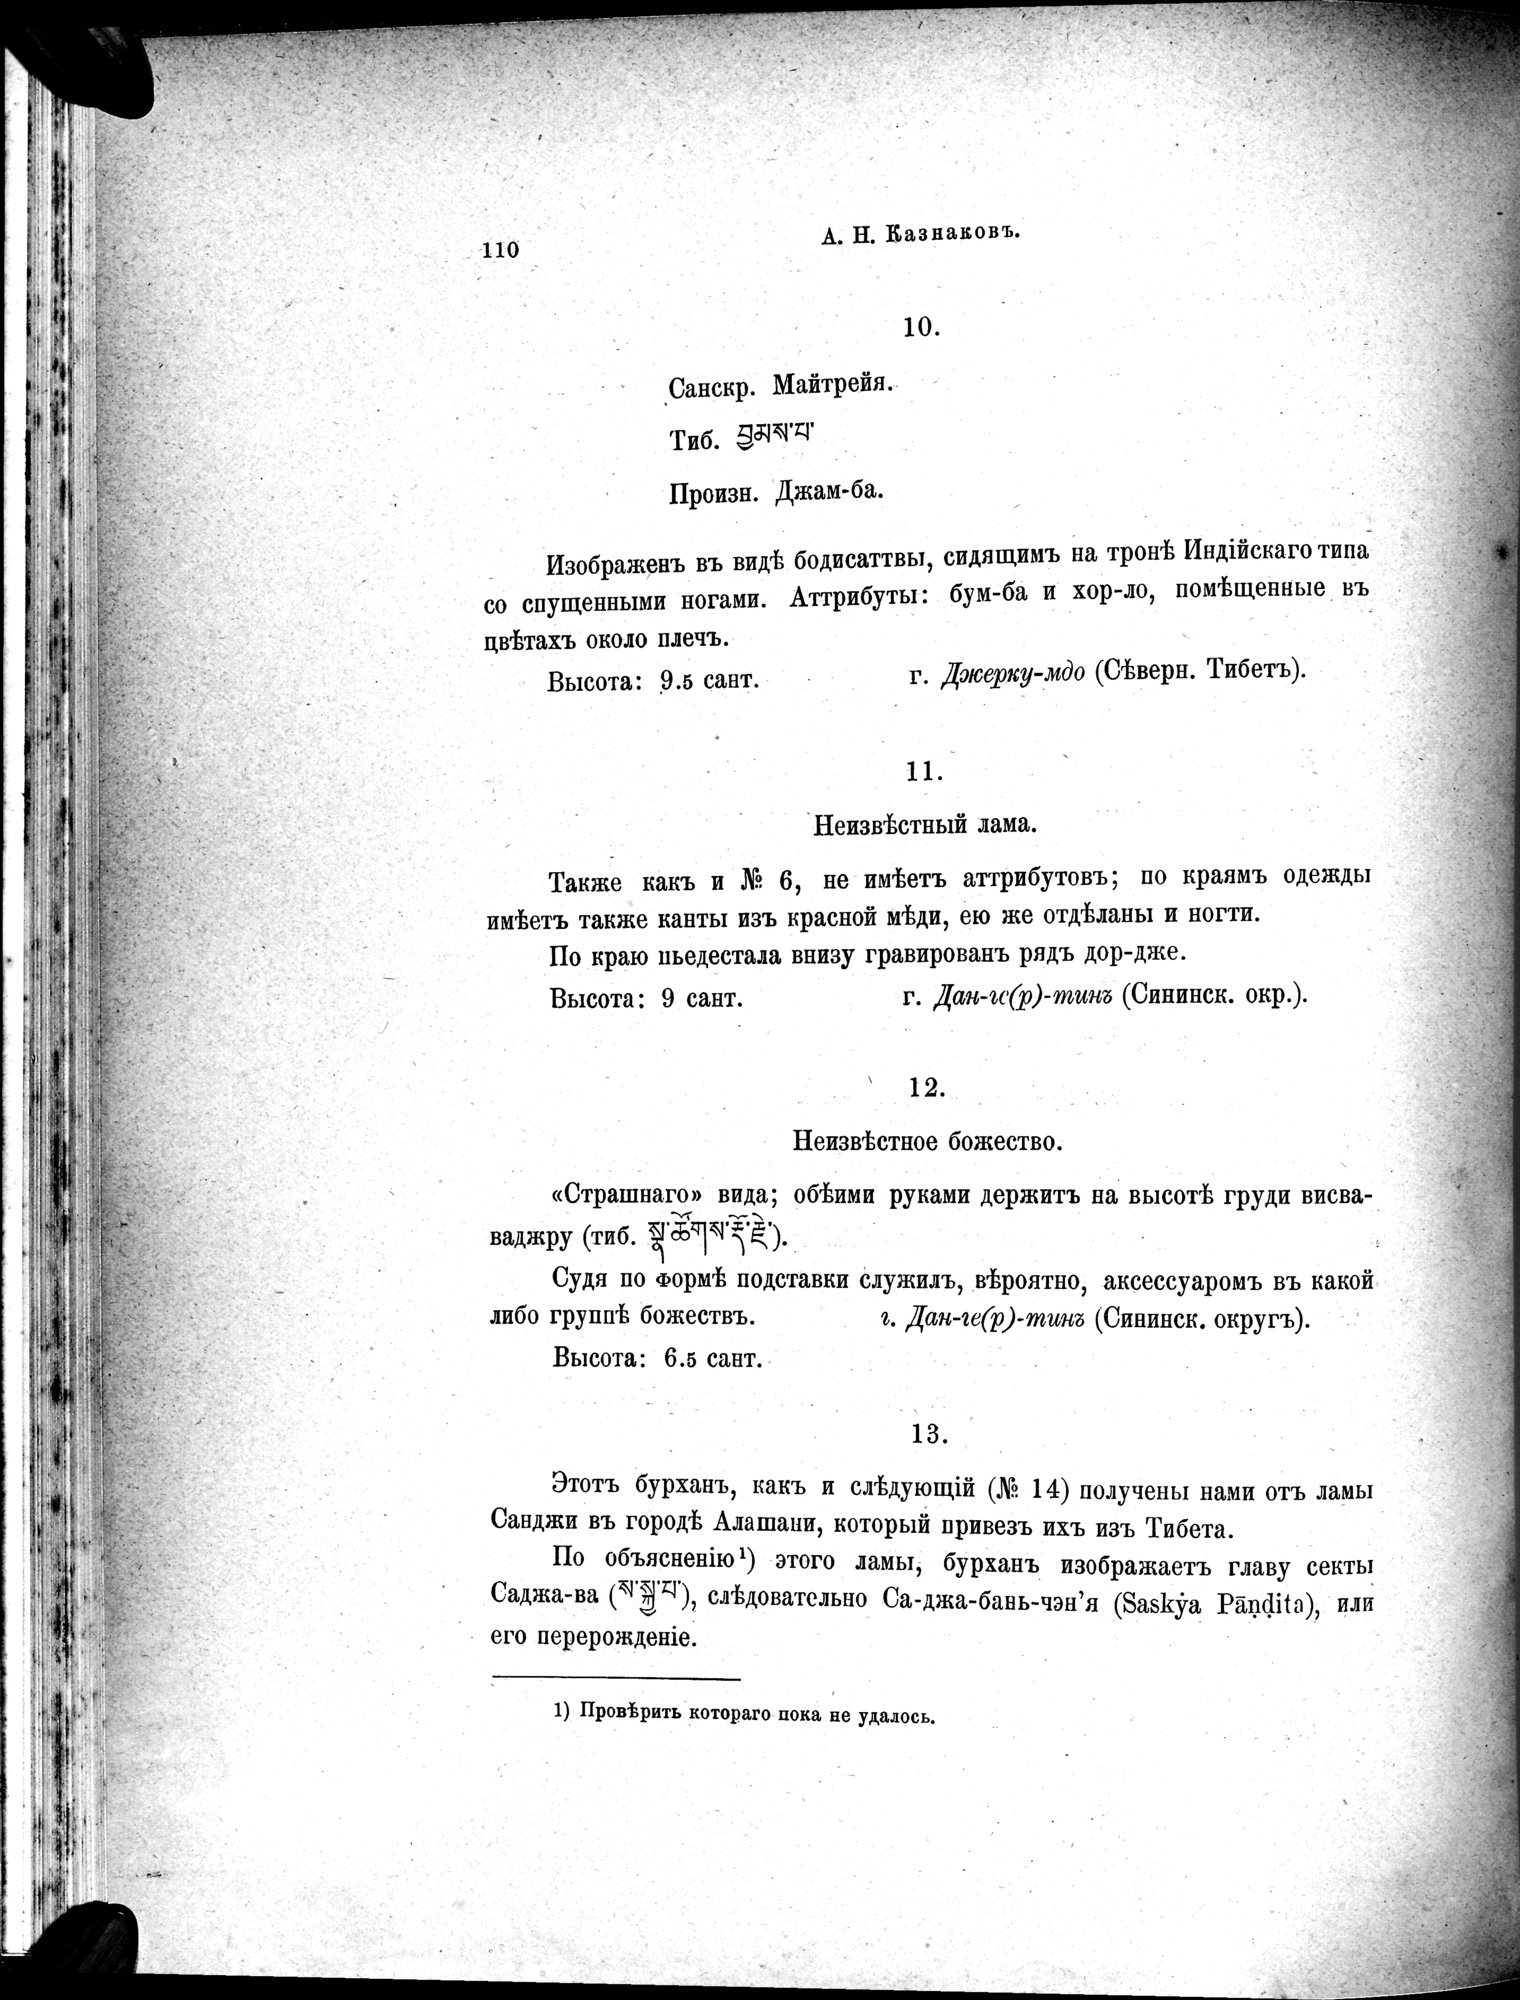 Mongoliia i Kam : vol.3 / Page 140 (Grayscale High Resolution Image)